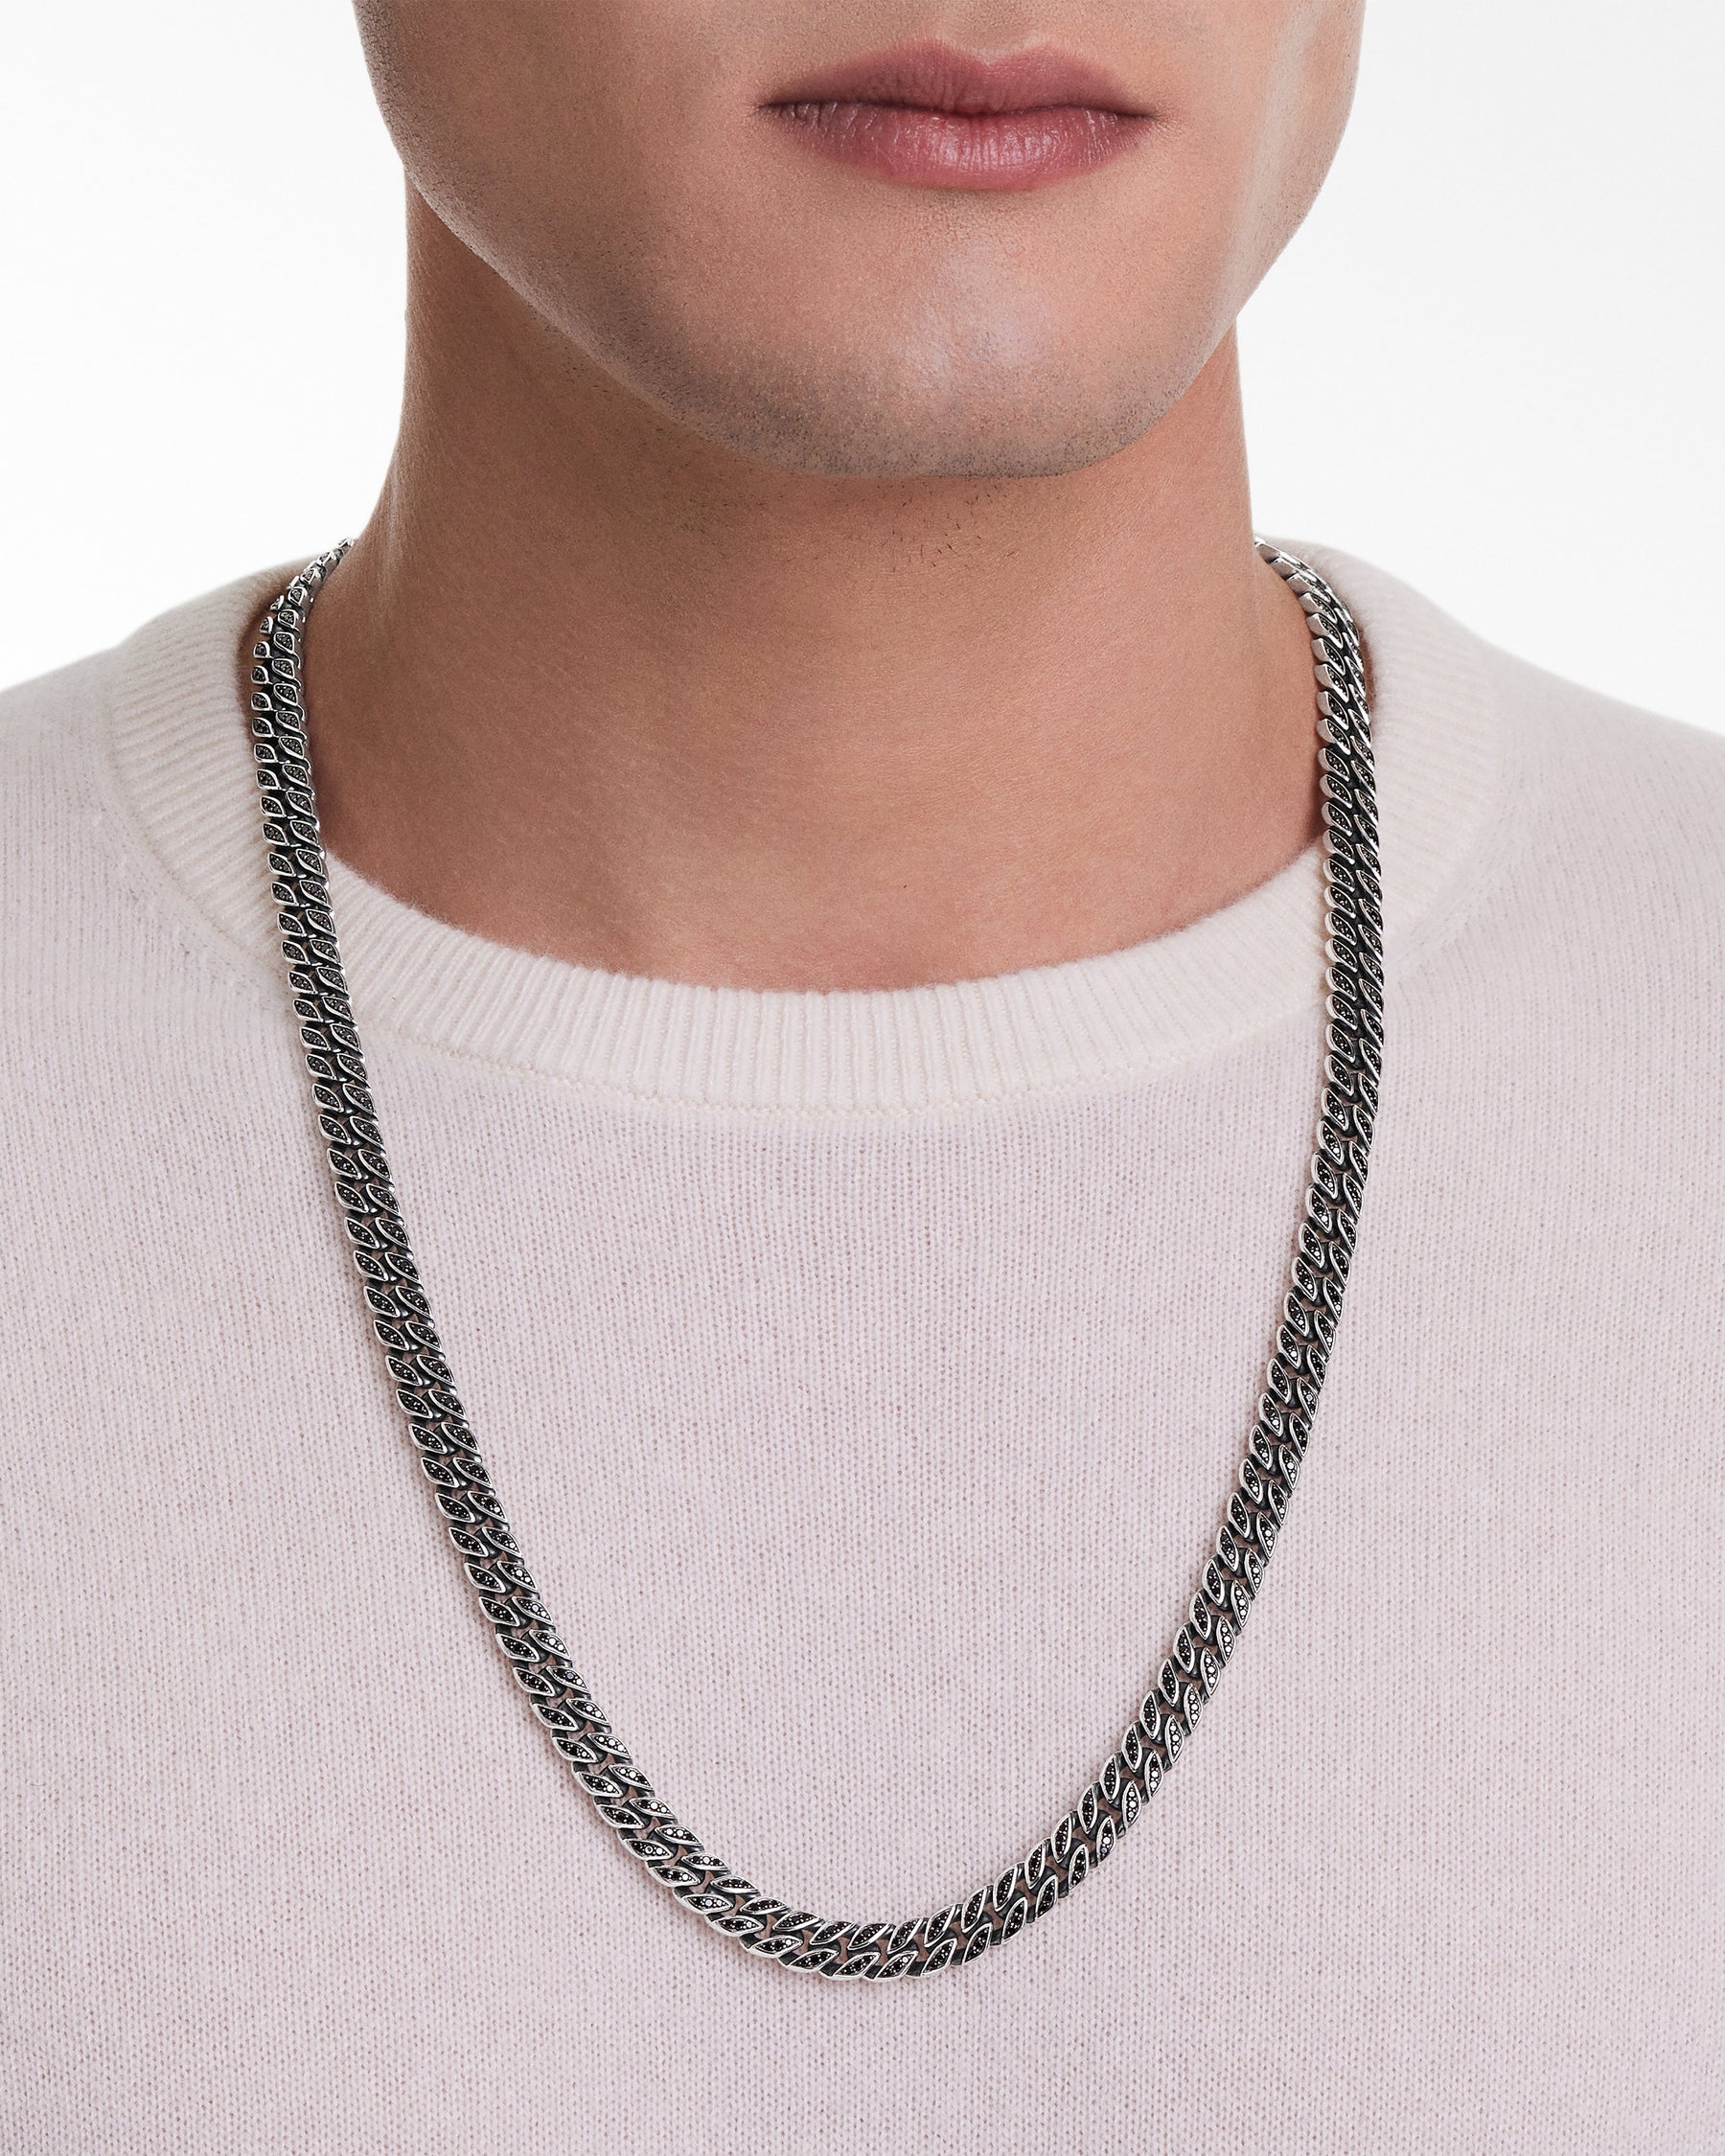 David Yurman Men's Curb Chain Necklace with Pavé Black Diamonds - Sterling Silver - Size 22